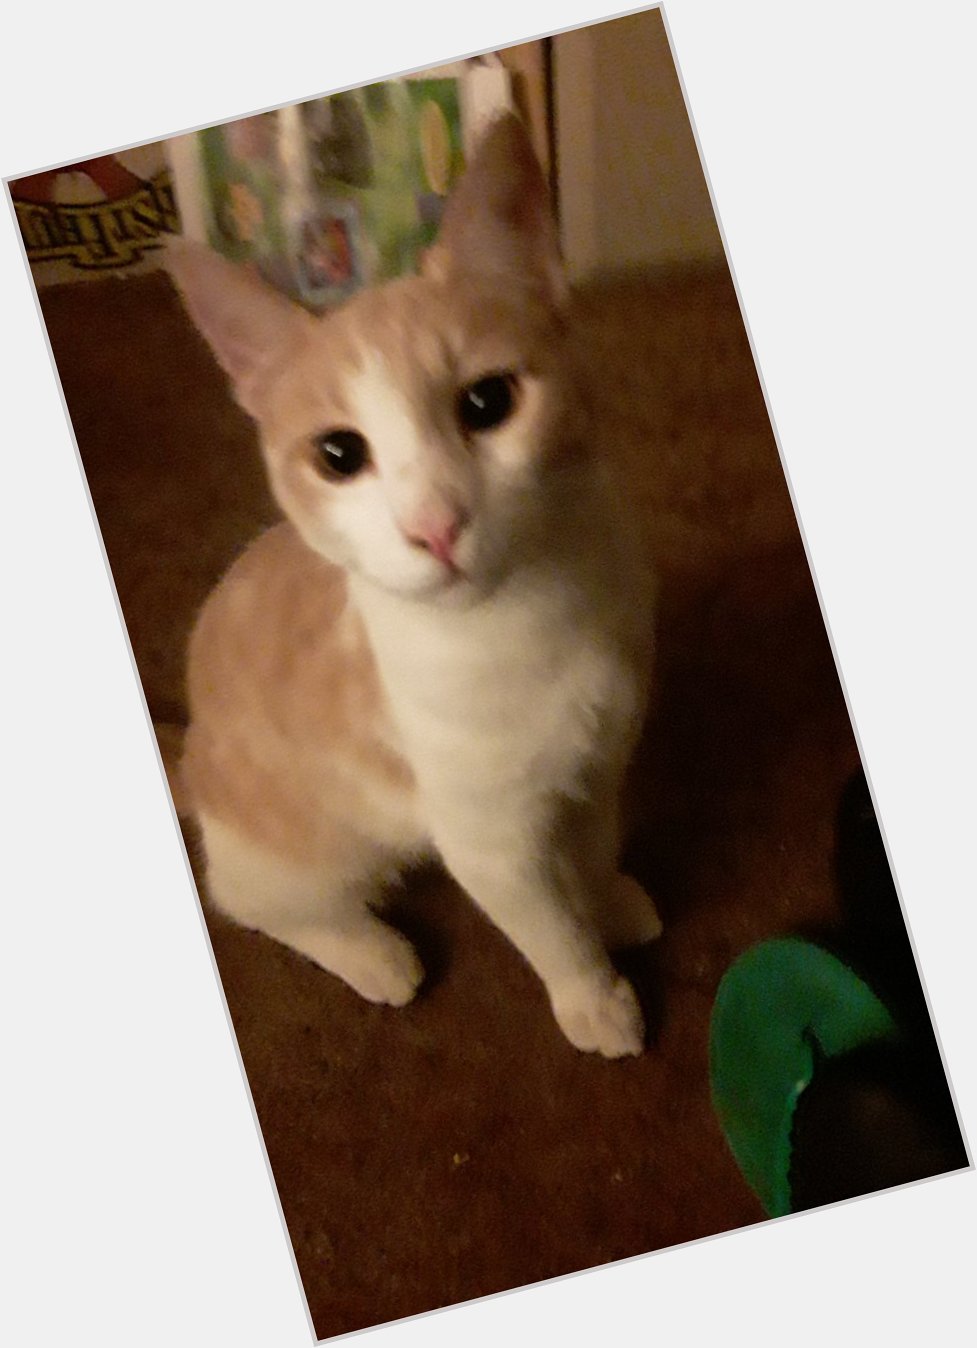  Happy birthday. My cat Snowhite greets you too. 